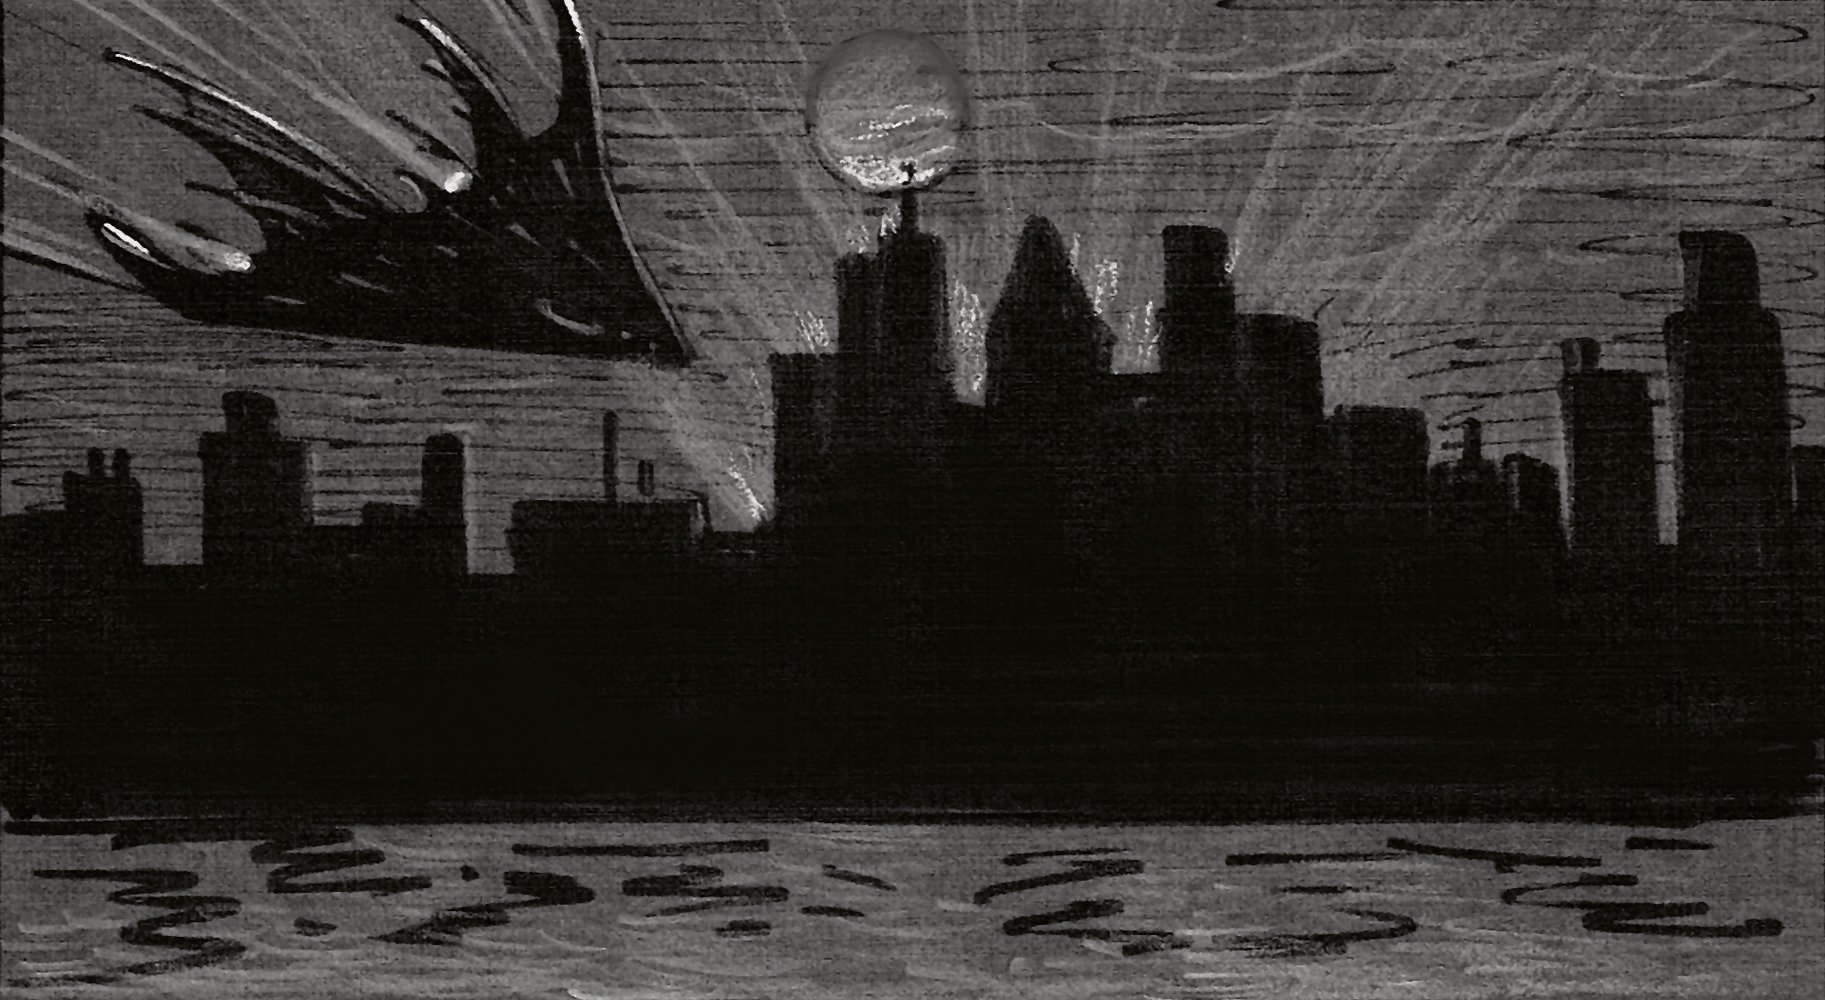 Gotham City Background Related Keywords amp Suggestions